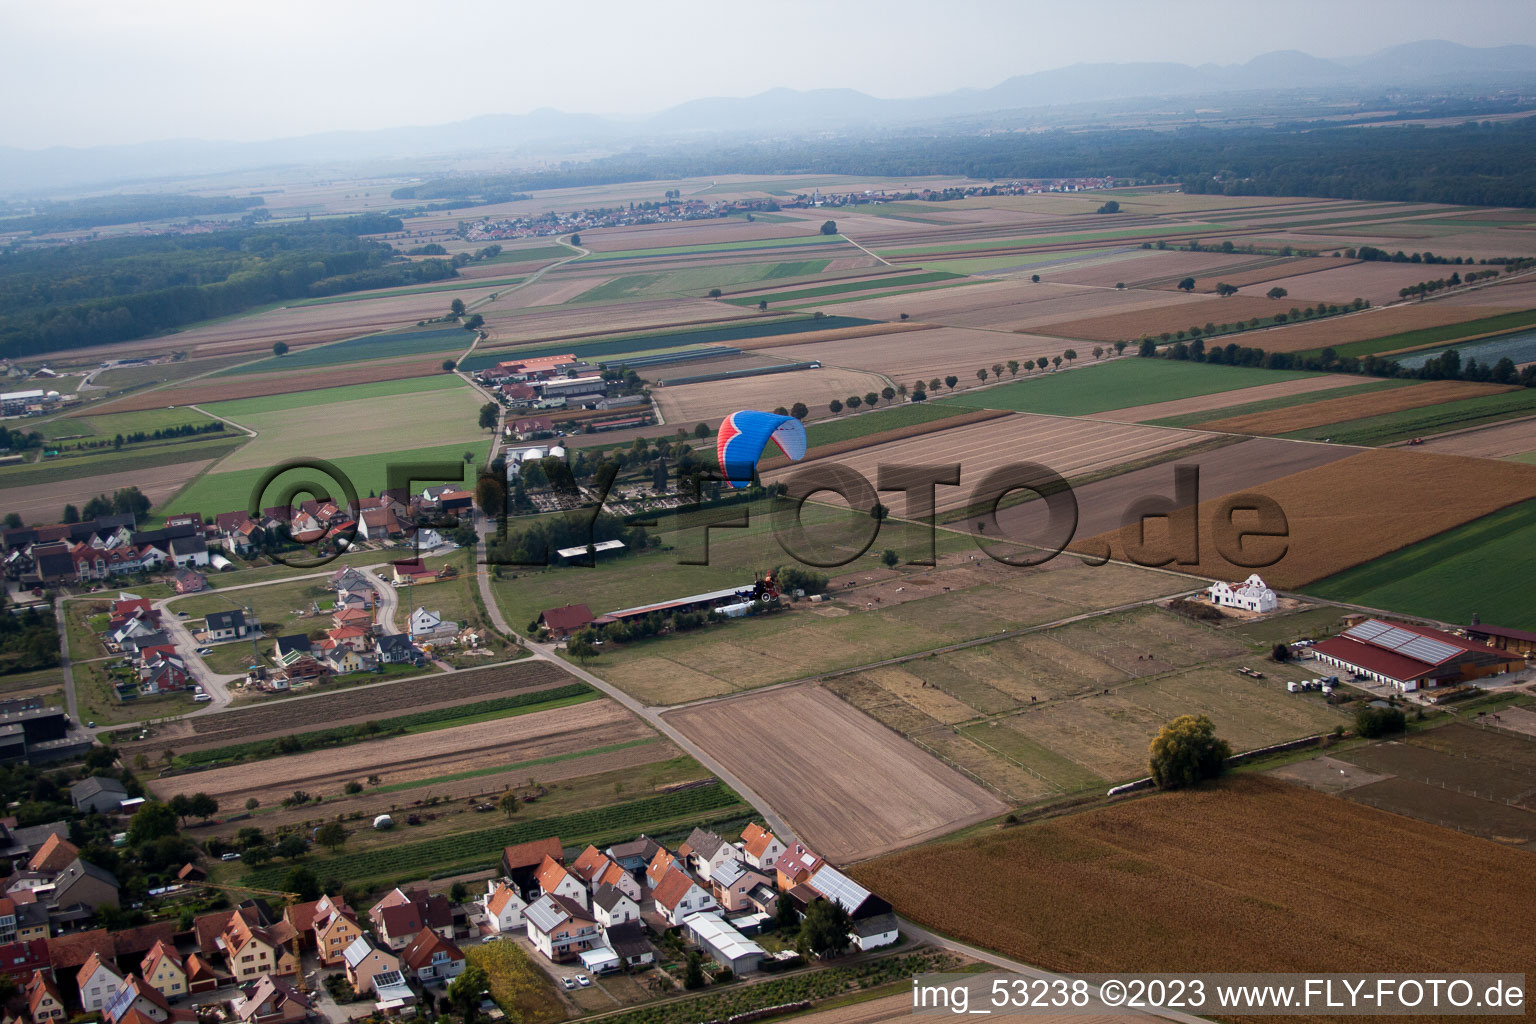 Aerial view of Hatzenbühl in the state Rhineland-Palatinate, Germany